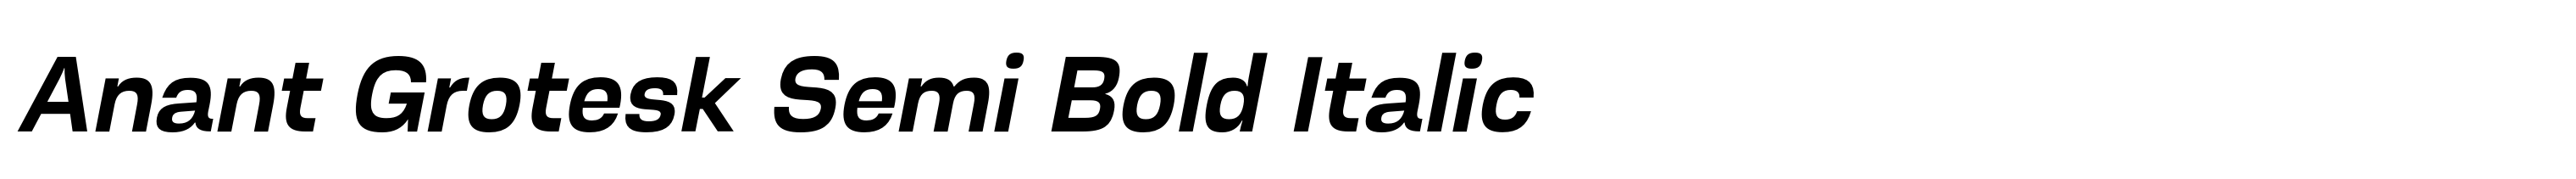 Anant Grotesk Semi Bold Italic